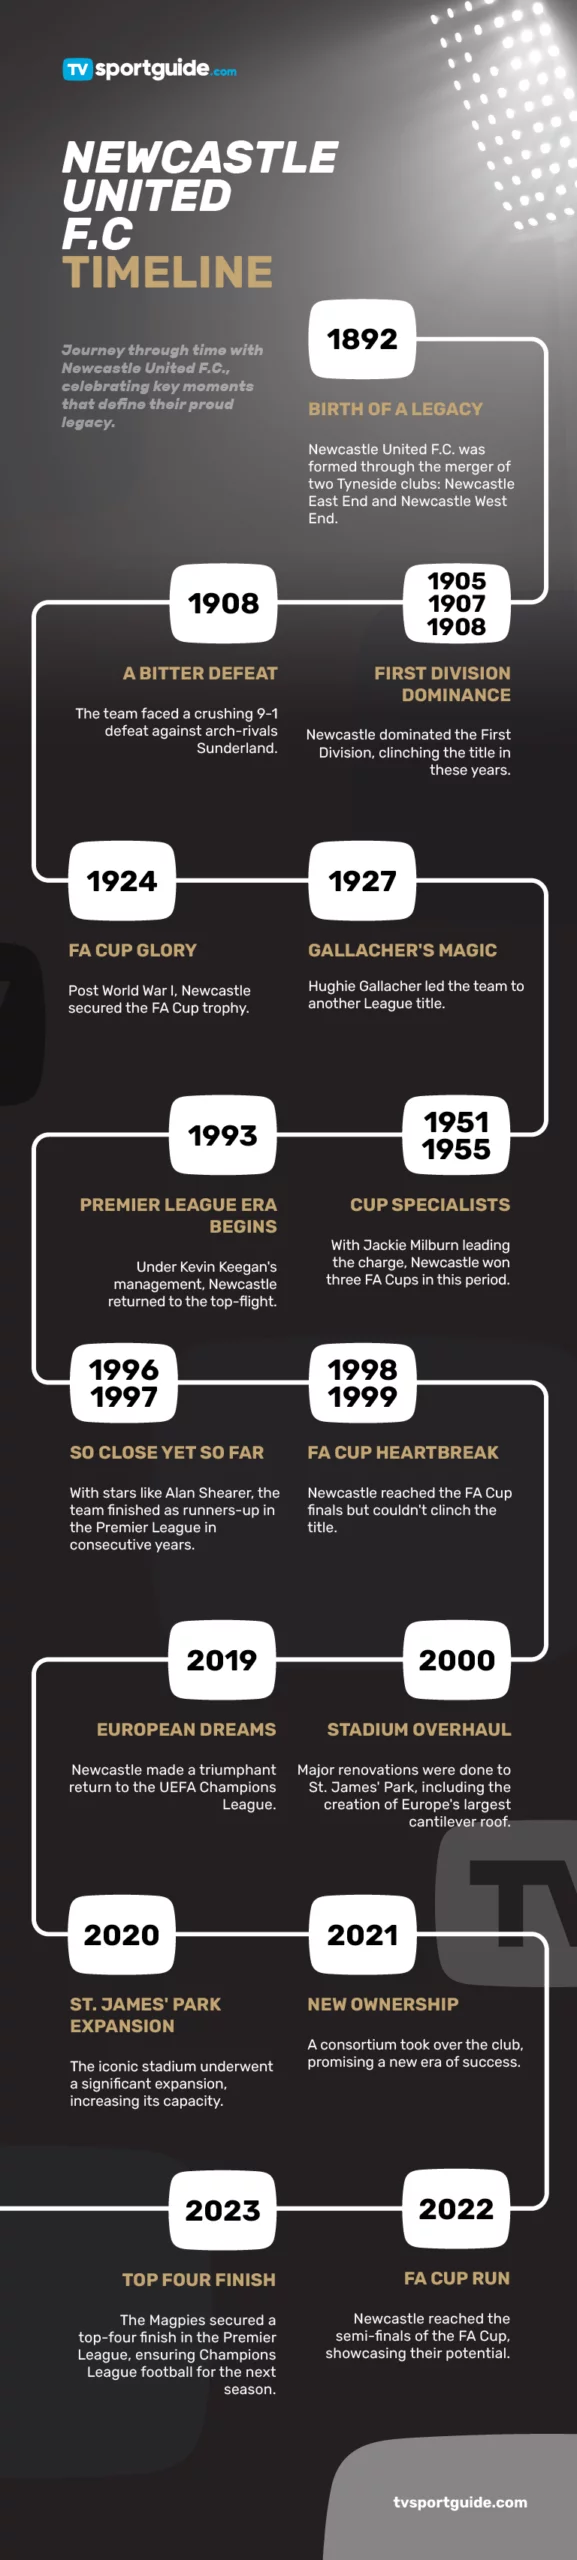 Newcastle United F.C. Timeline